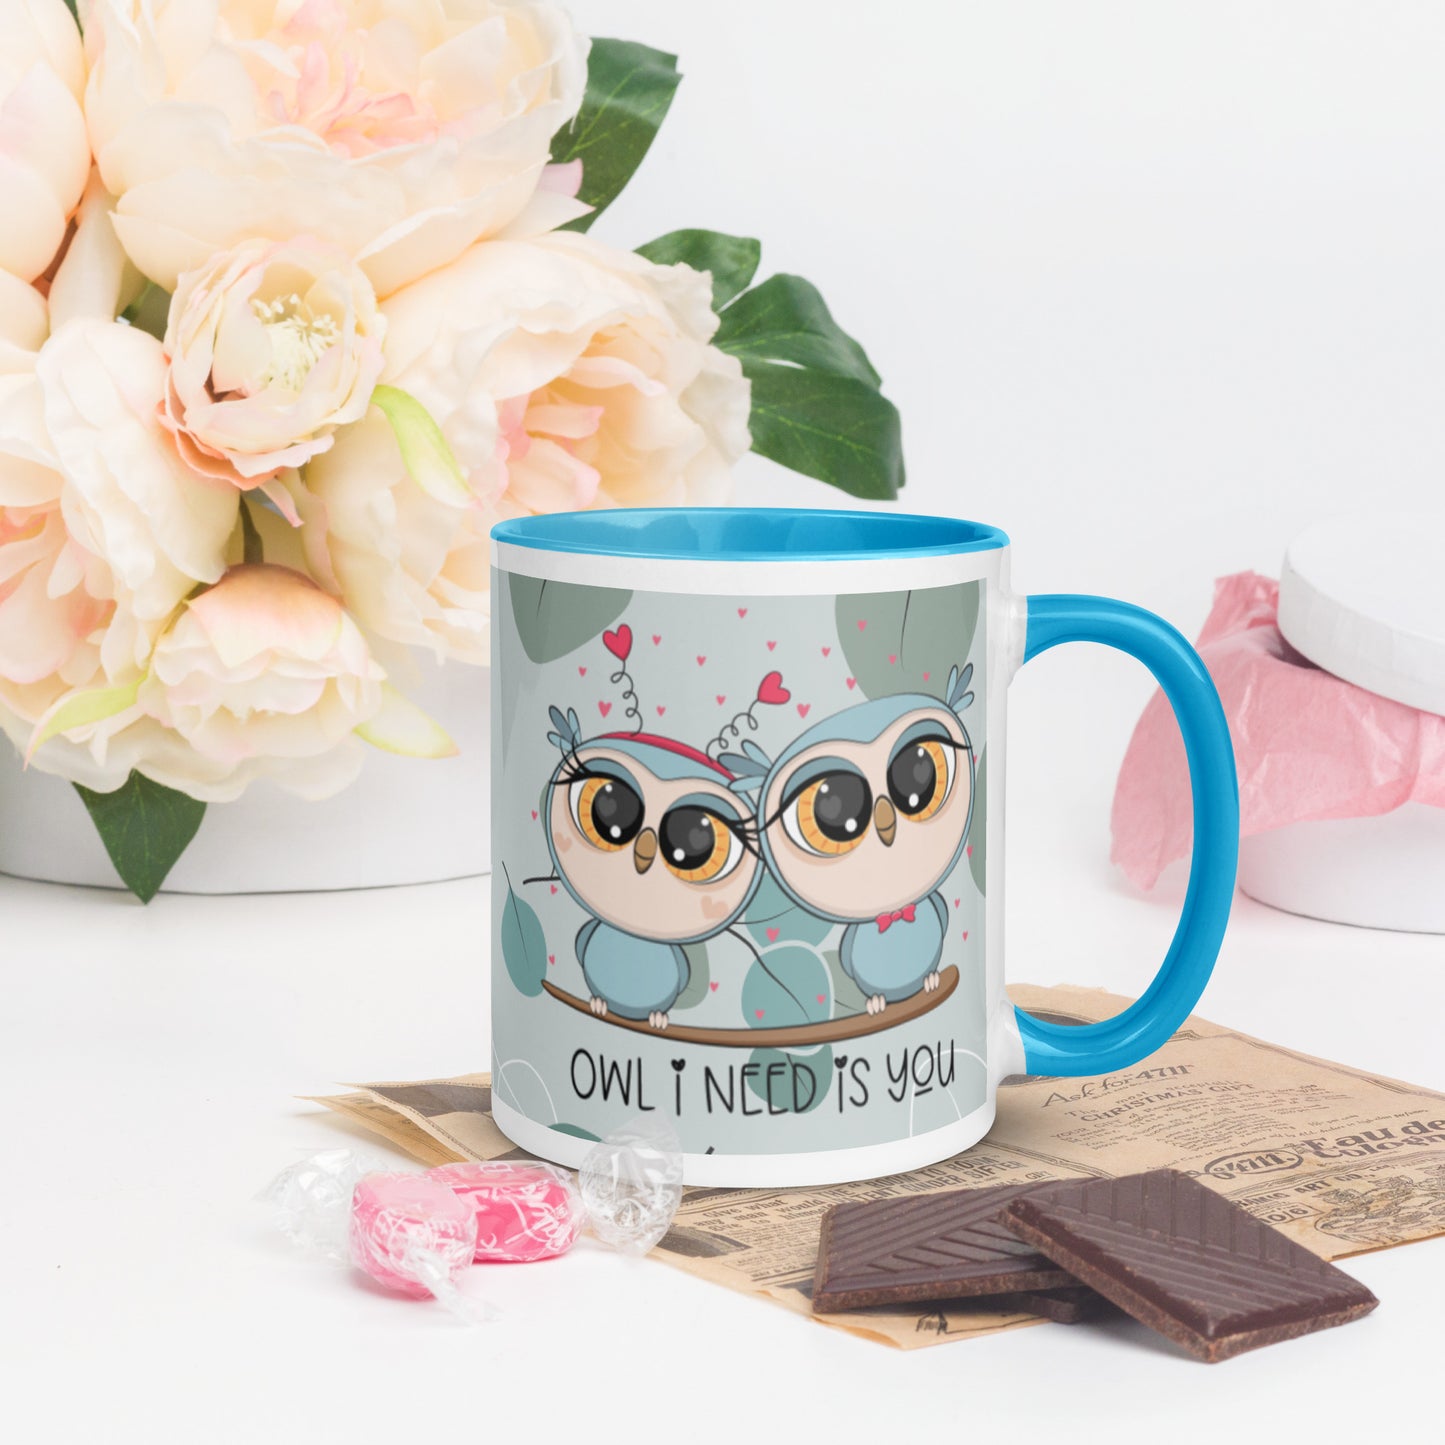 OWL I NEED IS YOU- Mug with Color Inside